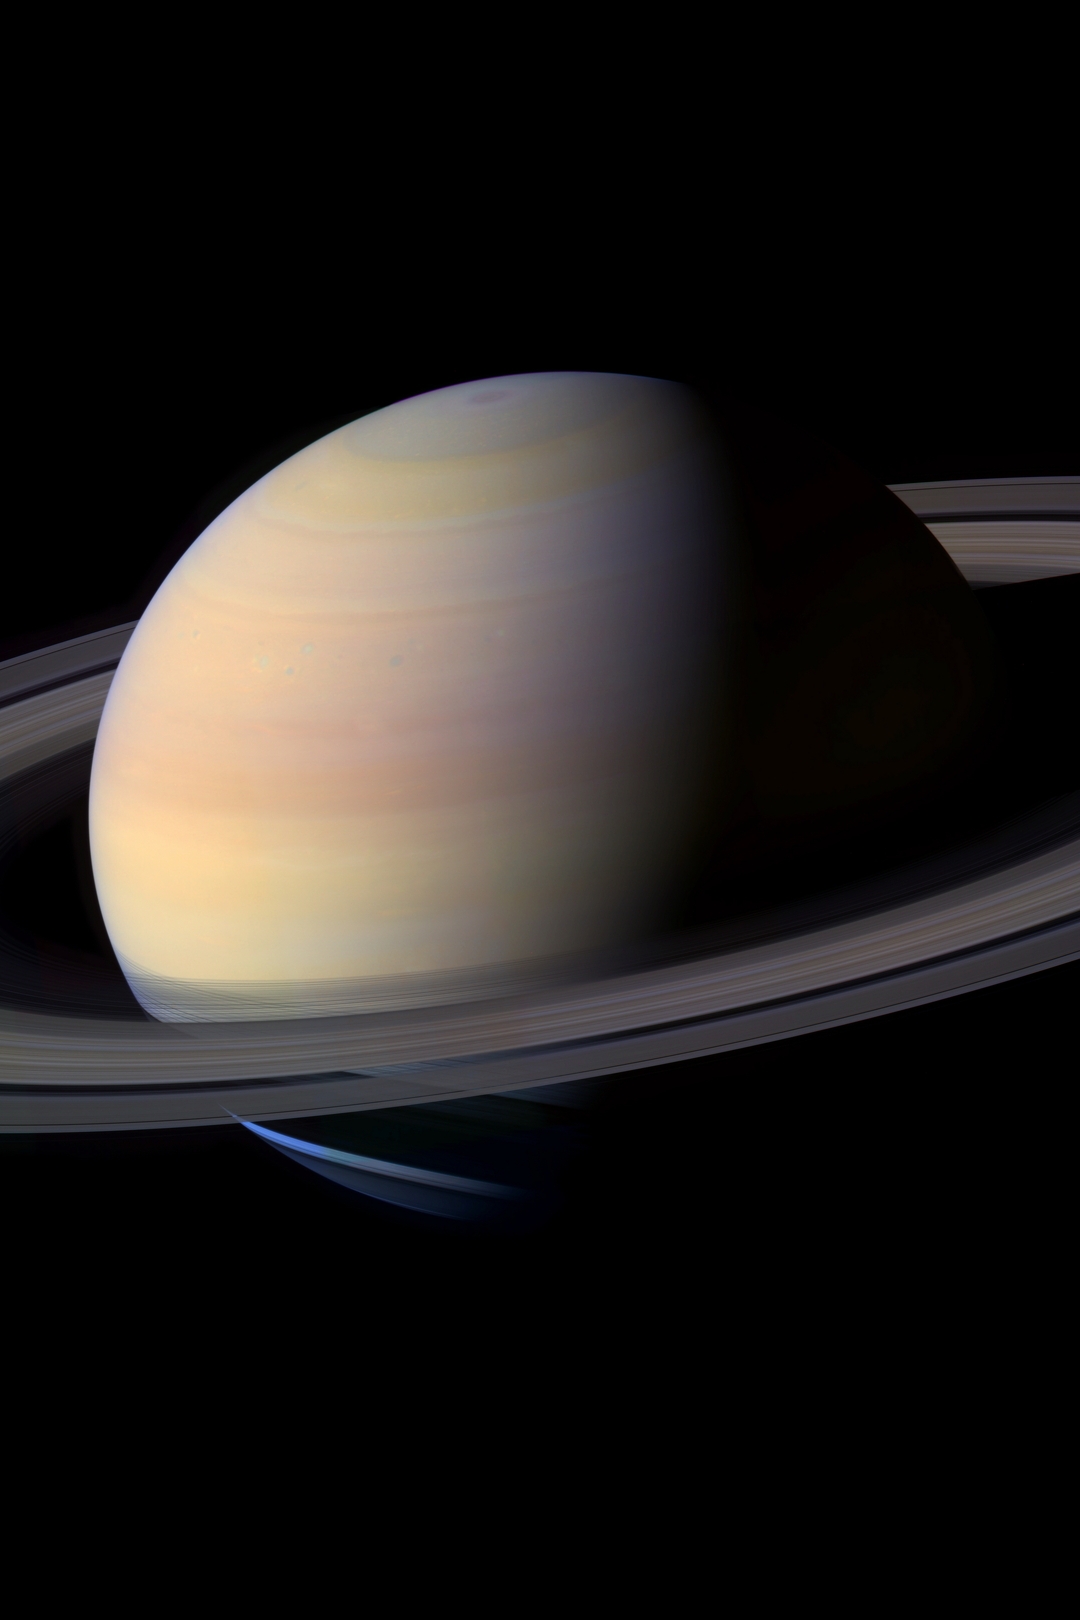 Картинка: Сатурн, кольца, планета, гигант, шар